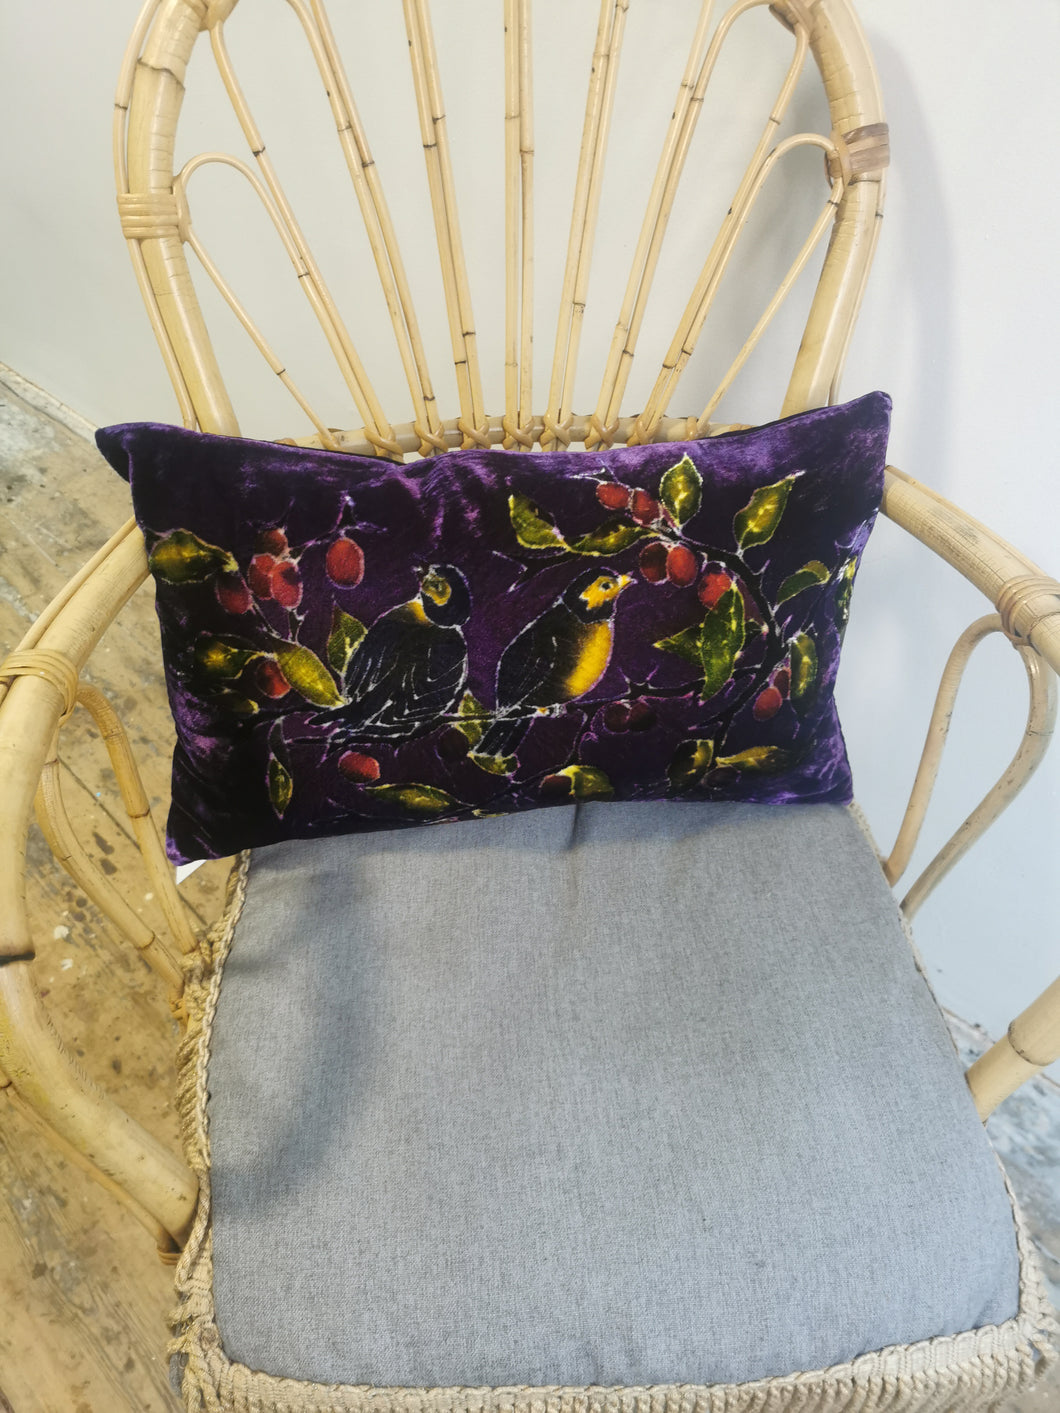 Hand-painted velvet cushions, SLOE BIRDS multi coloured on purple background.